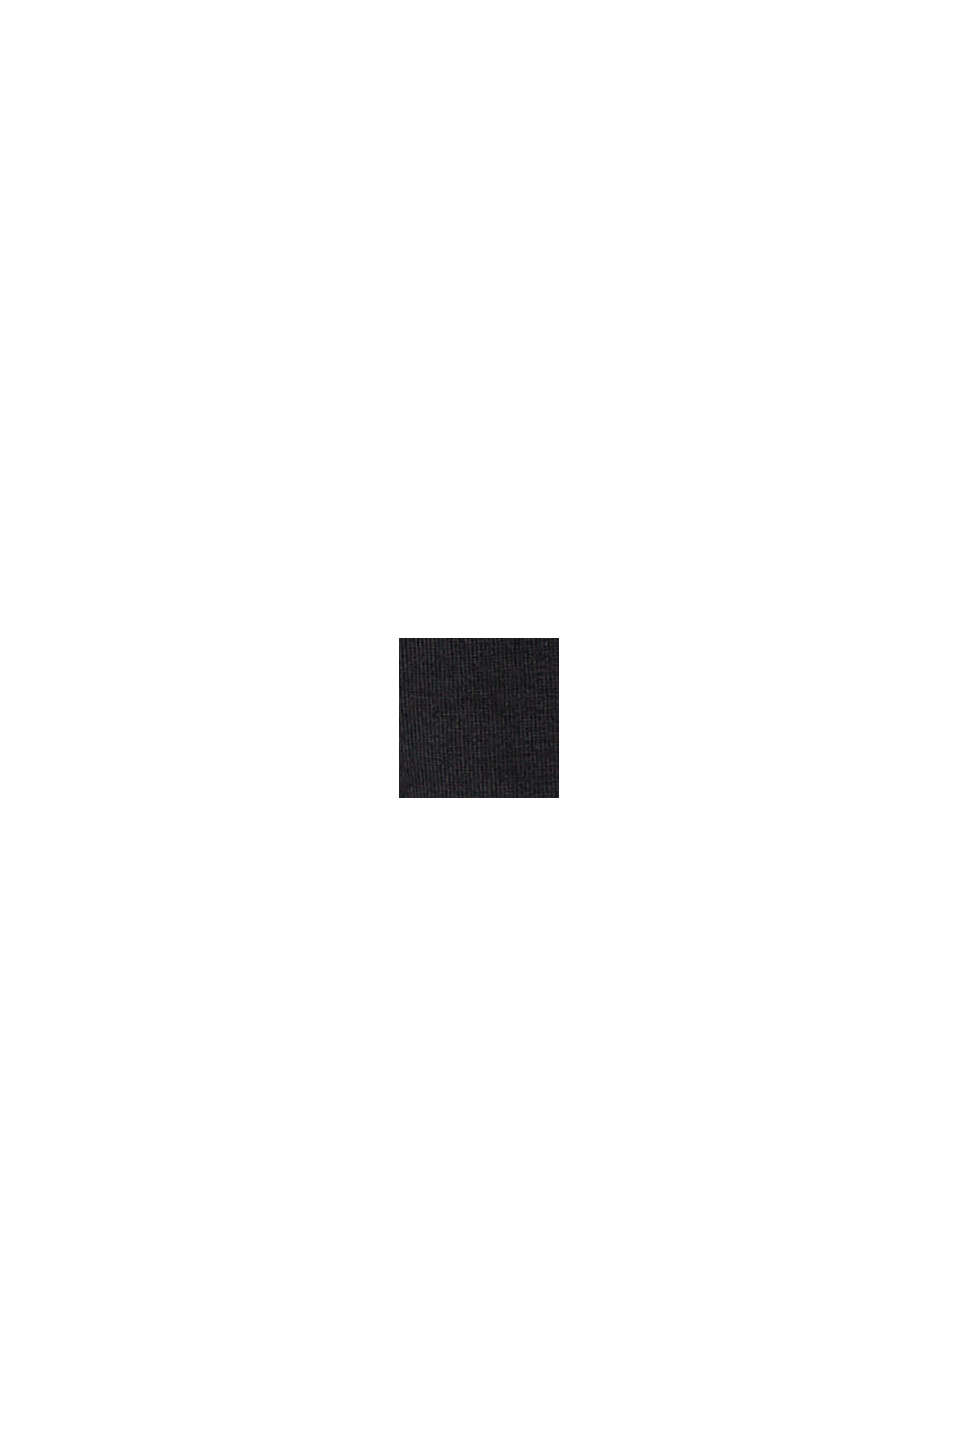 Minirock aus kompaktem Sweat, BLACK, swatch